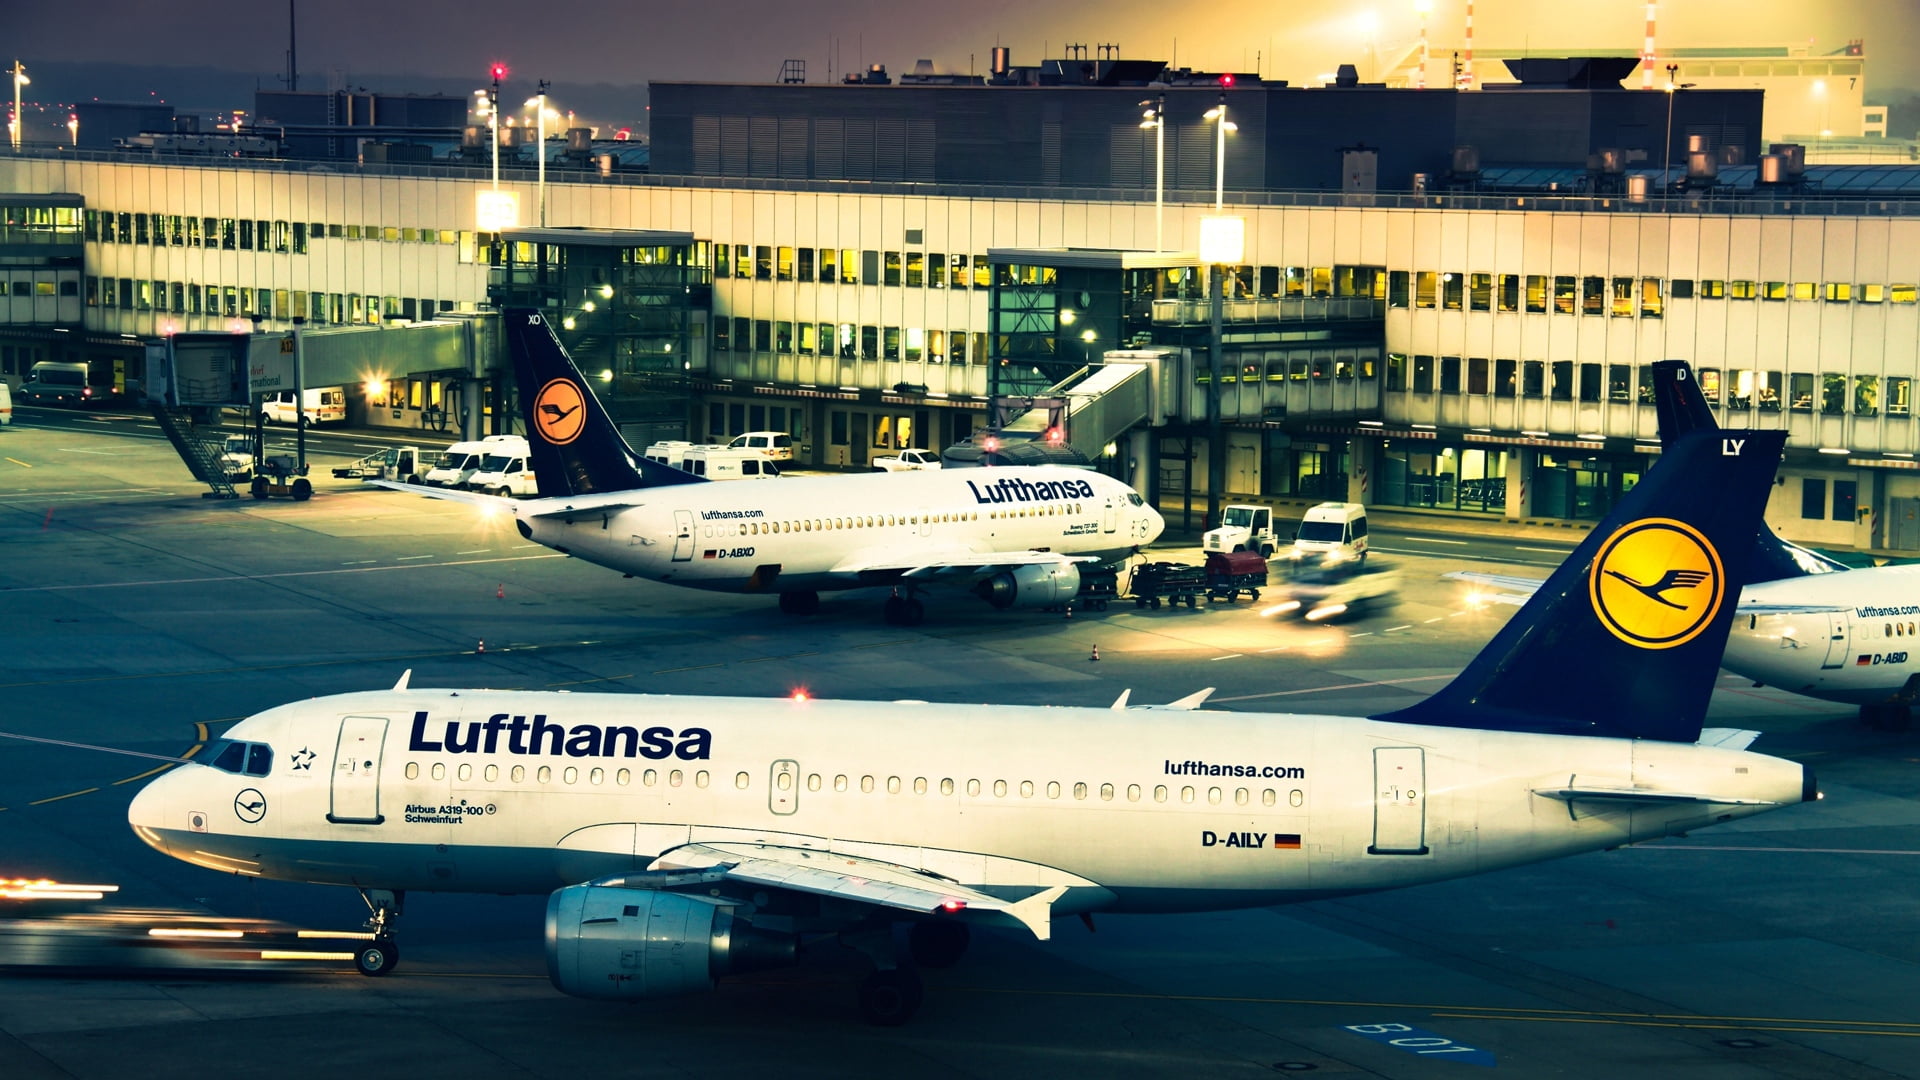 Lufthansa passenger airplane, aircraft, aviation, airport, transportation